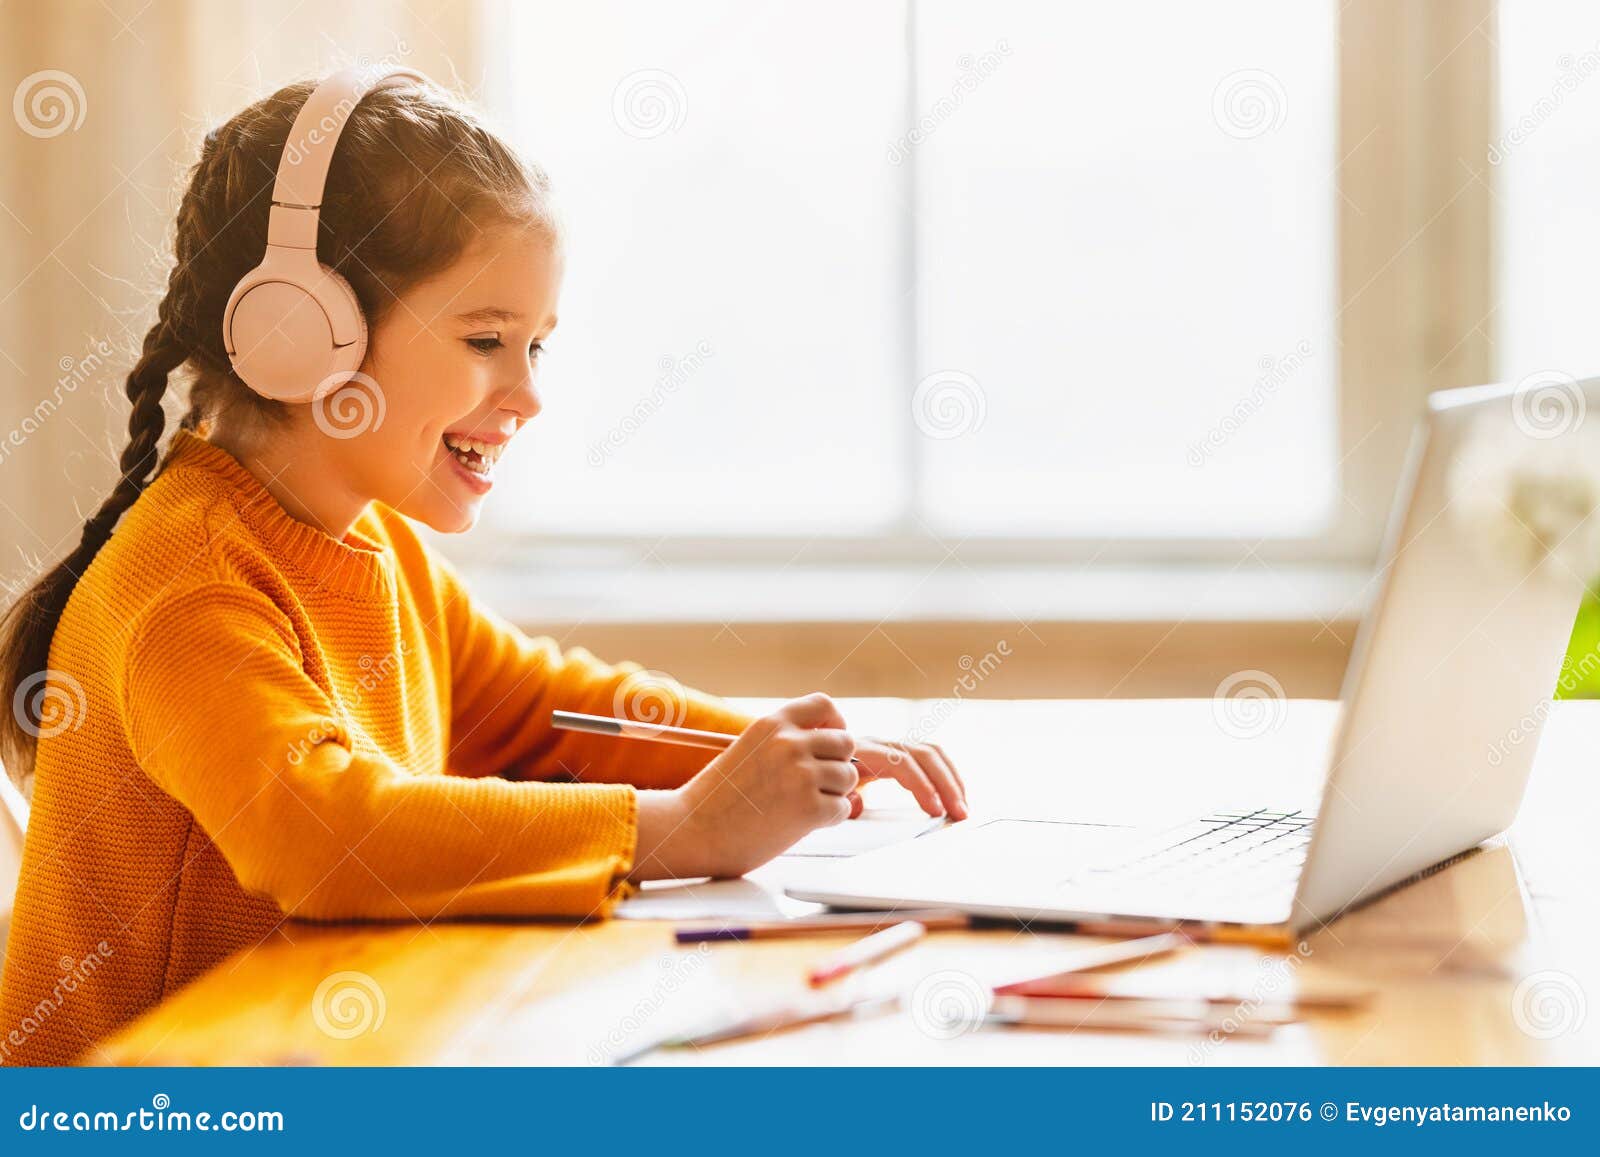 happy girl having online lesson via laptop at home